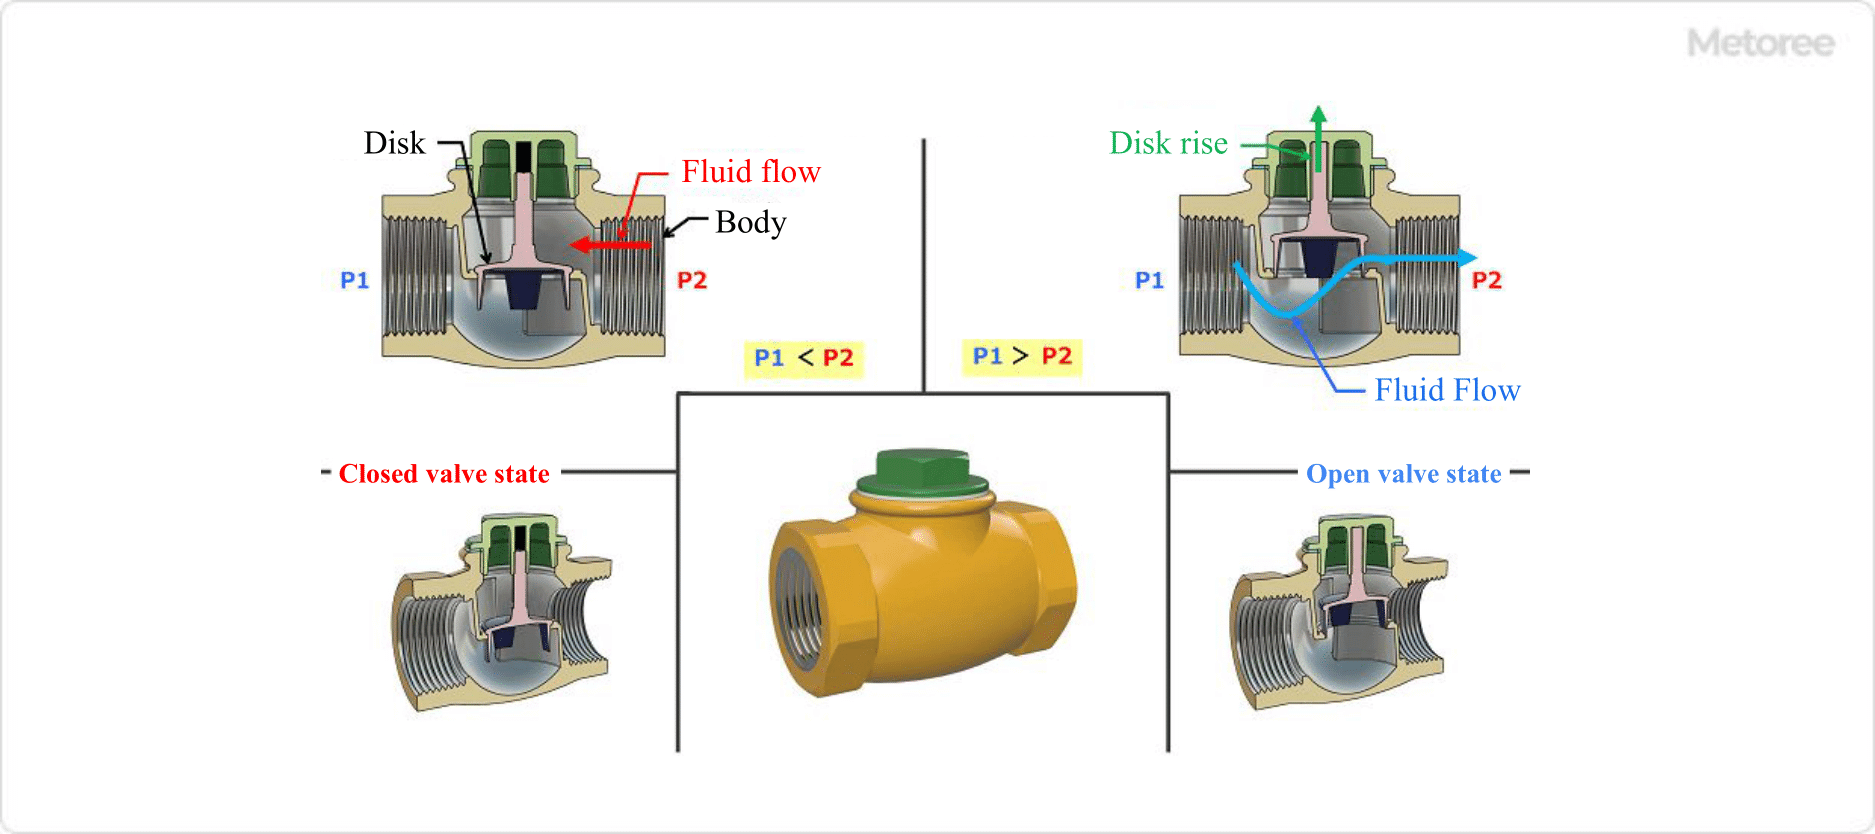 Figure 2. Lift check valve